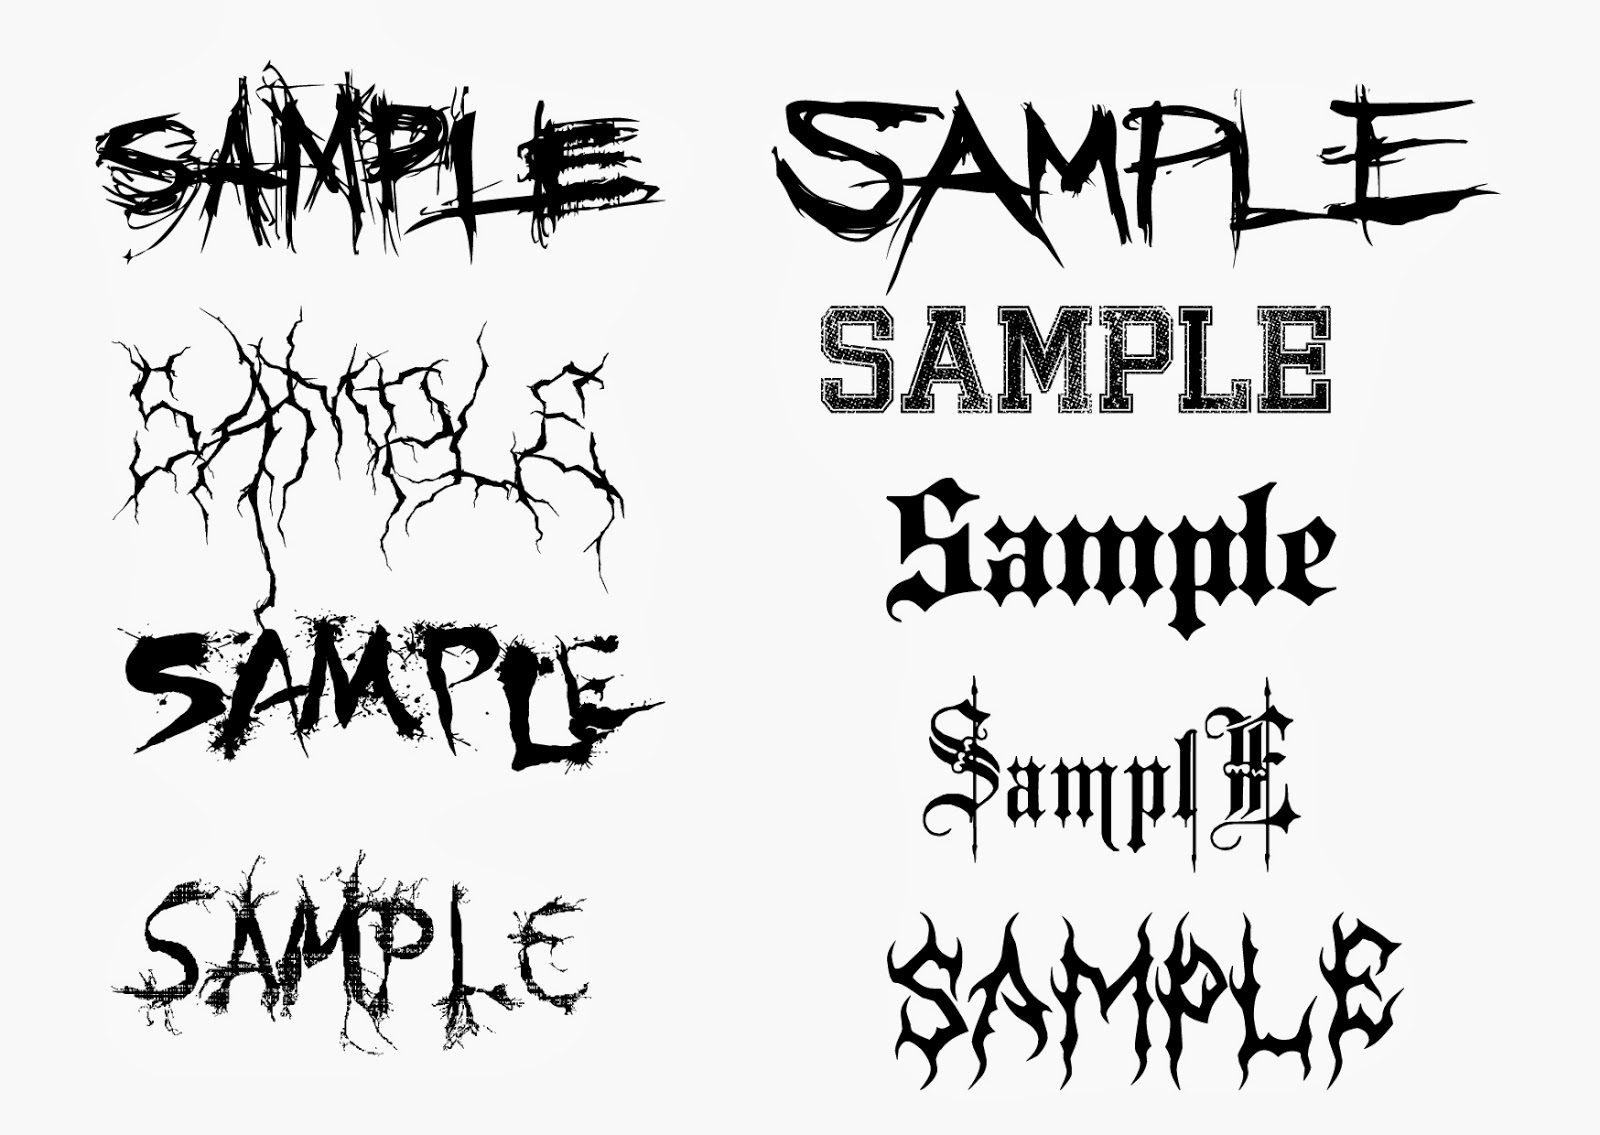 Шрифт металл групп. Black Metal шрифт. Надписи в стиле металл групп. Шрифт в стиле Блэк метал. Металлический шрифт.